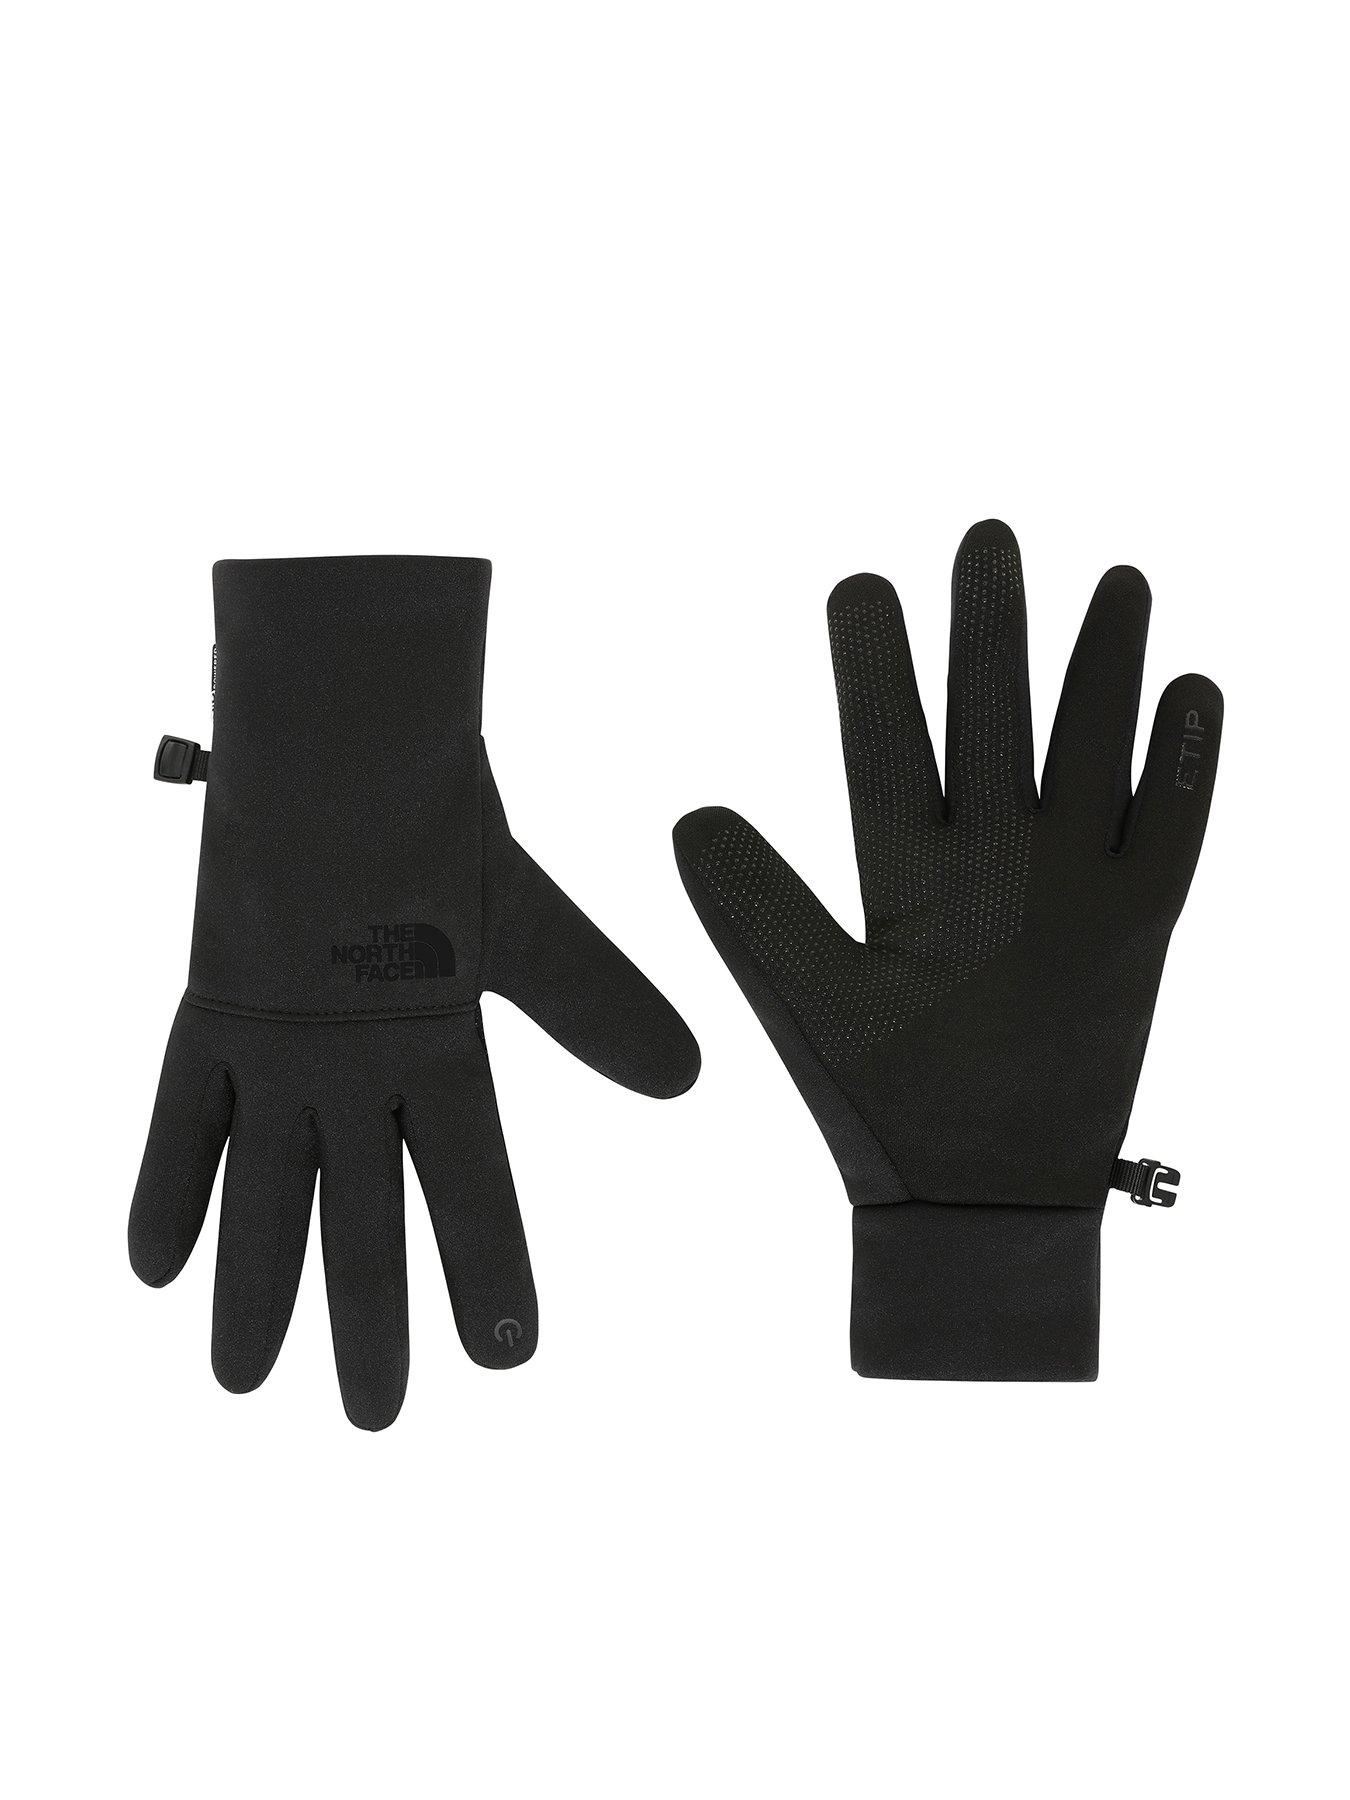  Recycled Etip Gloves - Black